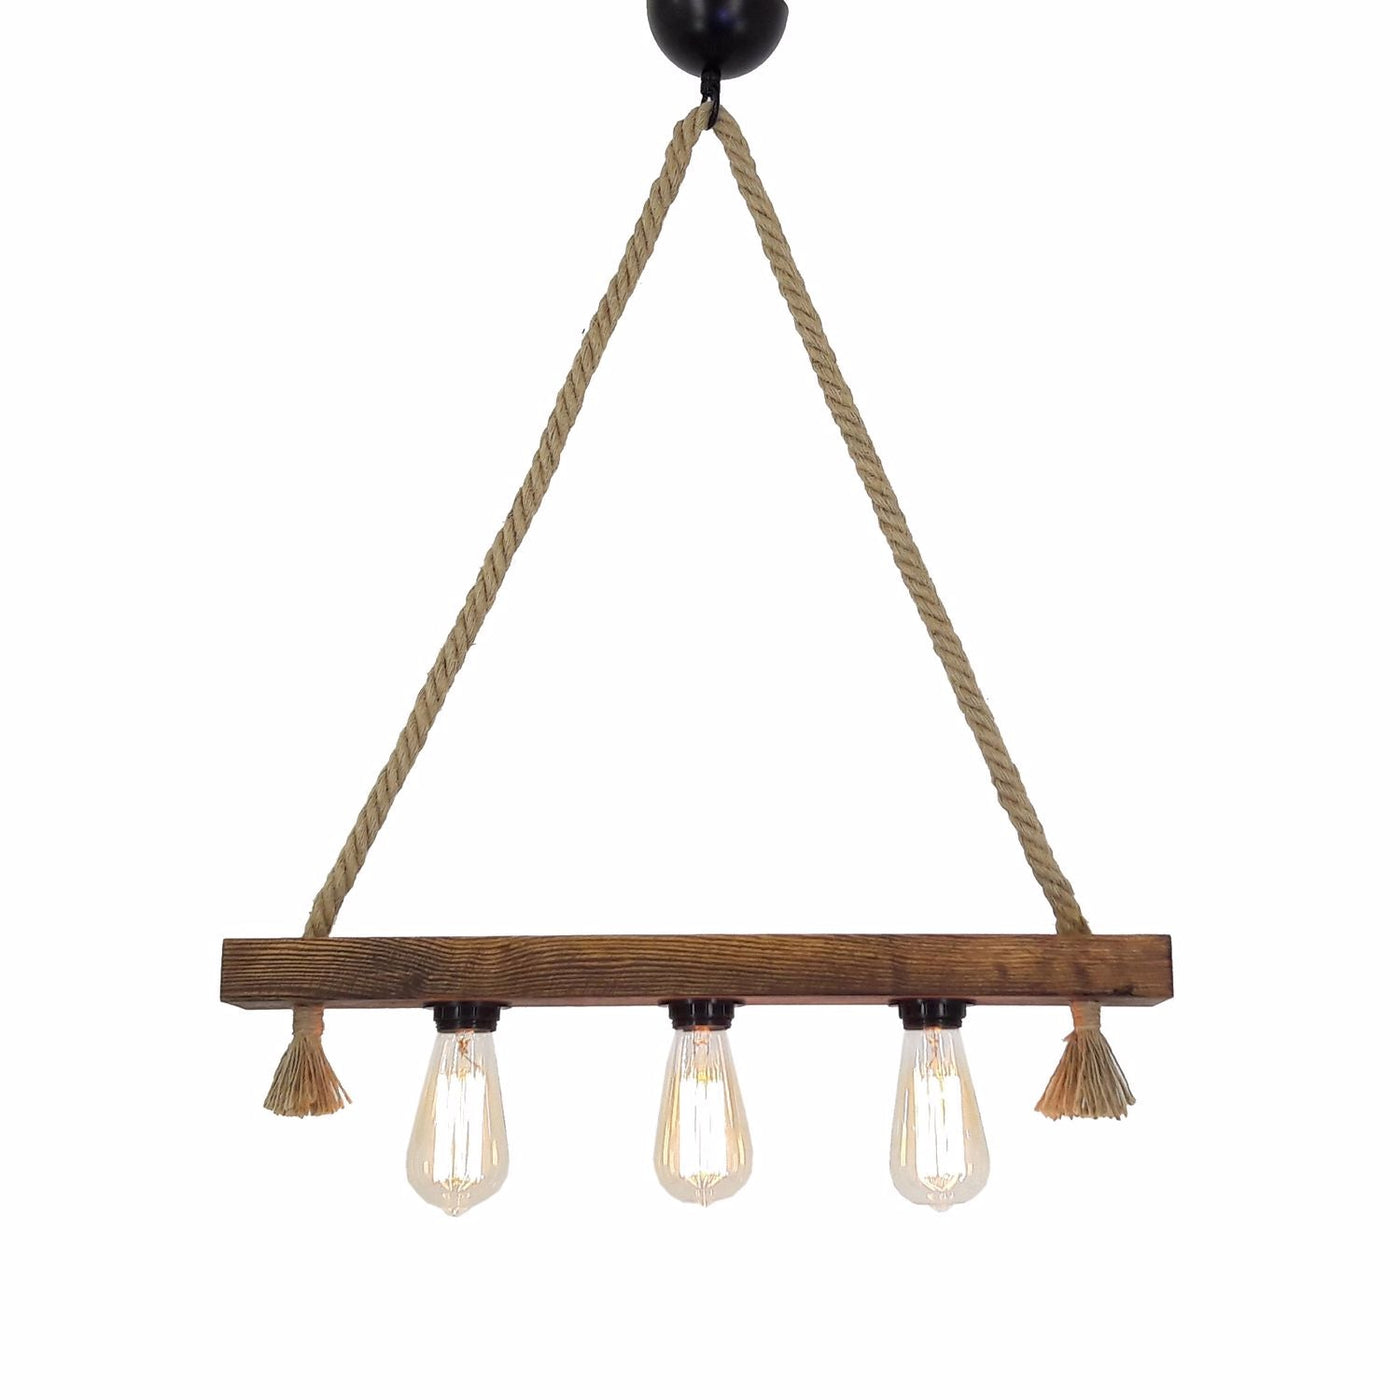 HT099 | Industriële hanglamp, hout, retro design | 3x E27-lampen